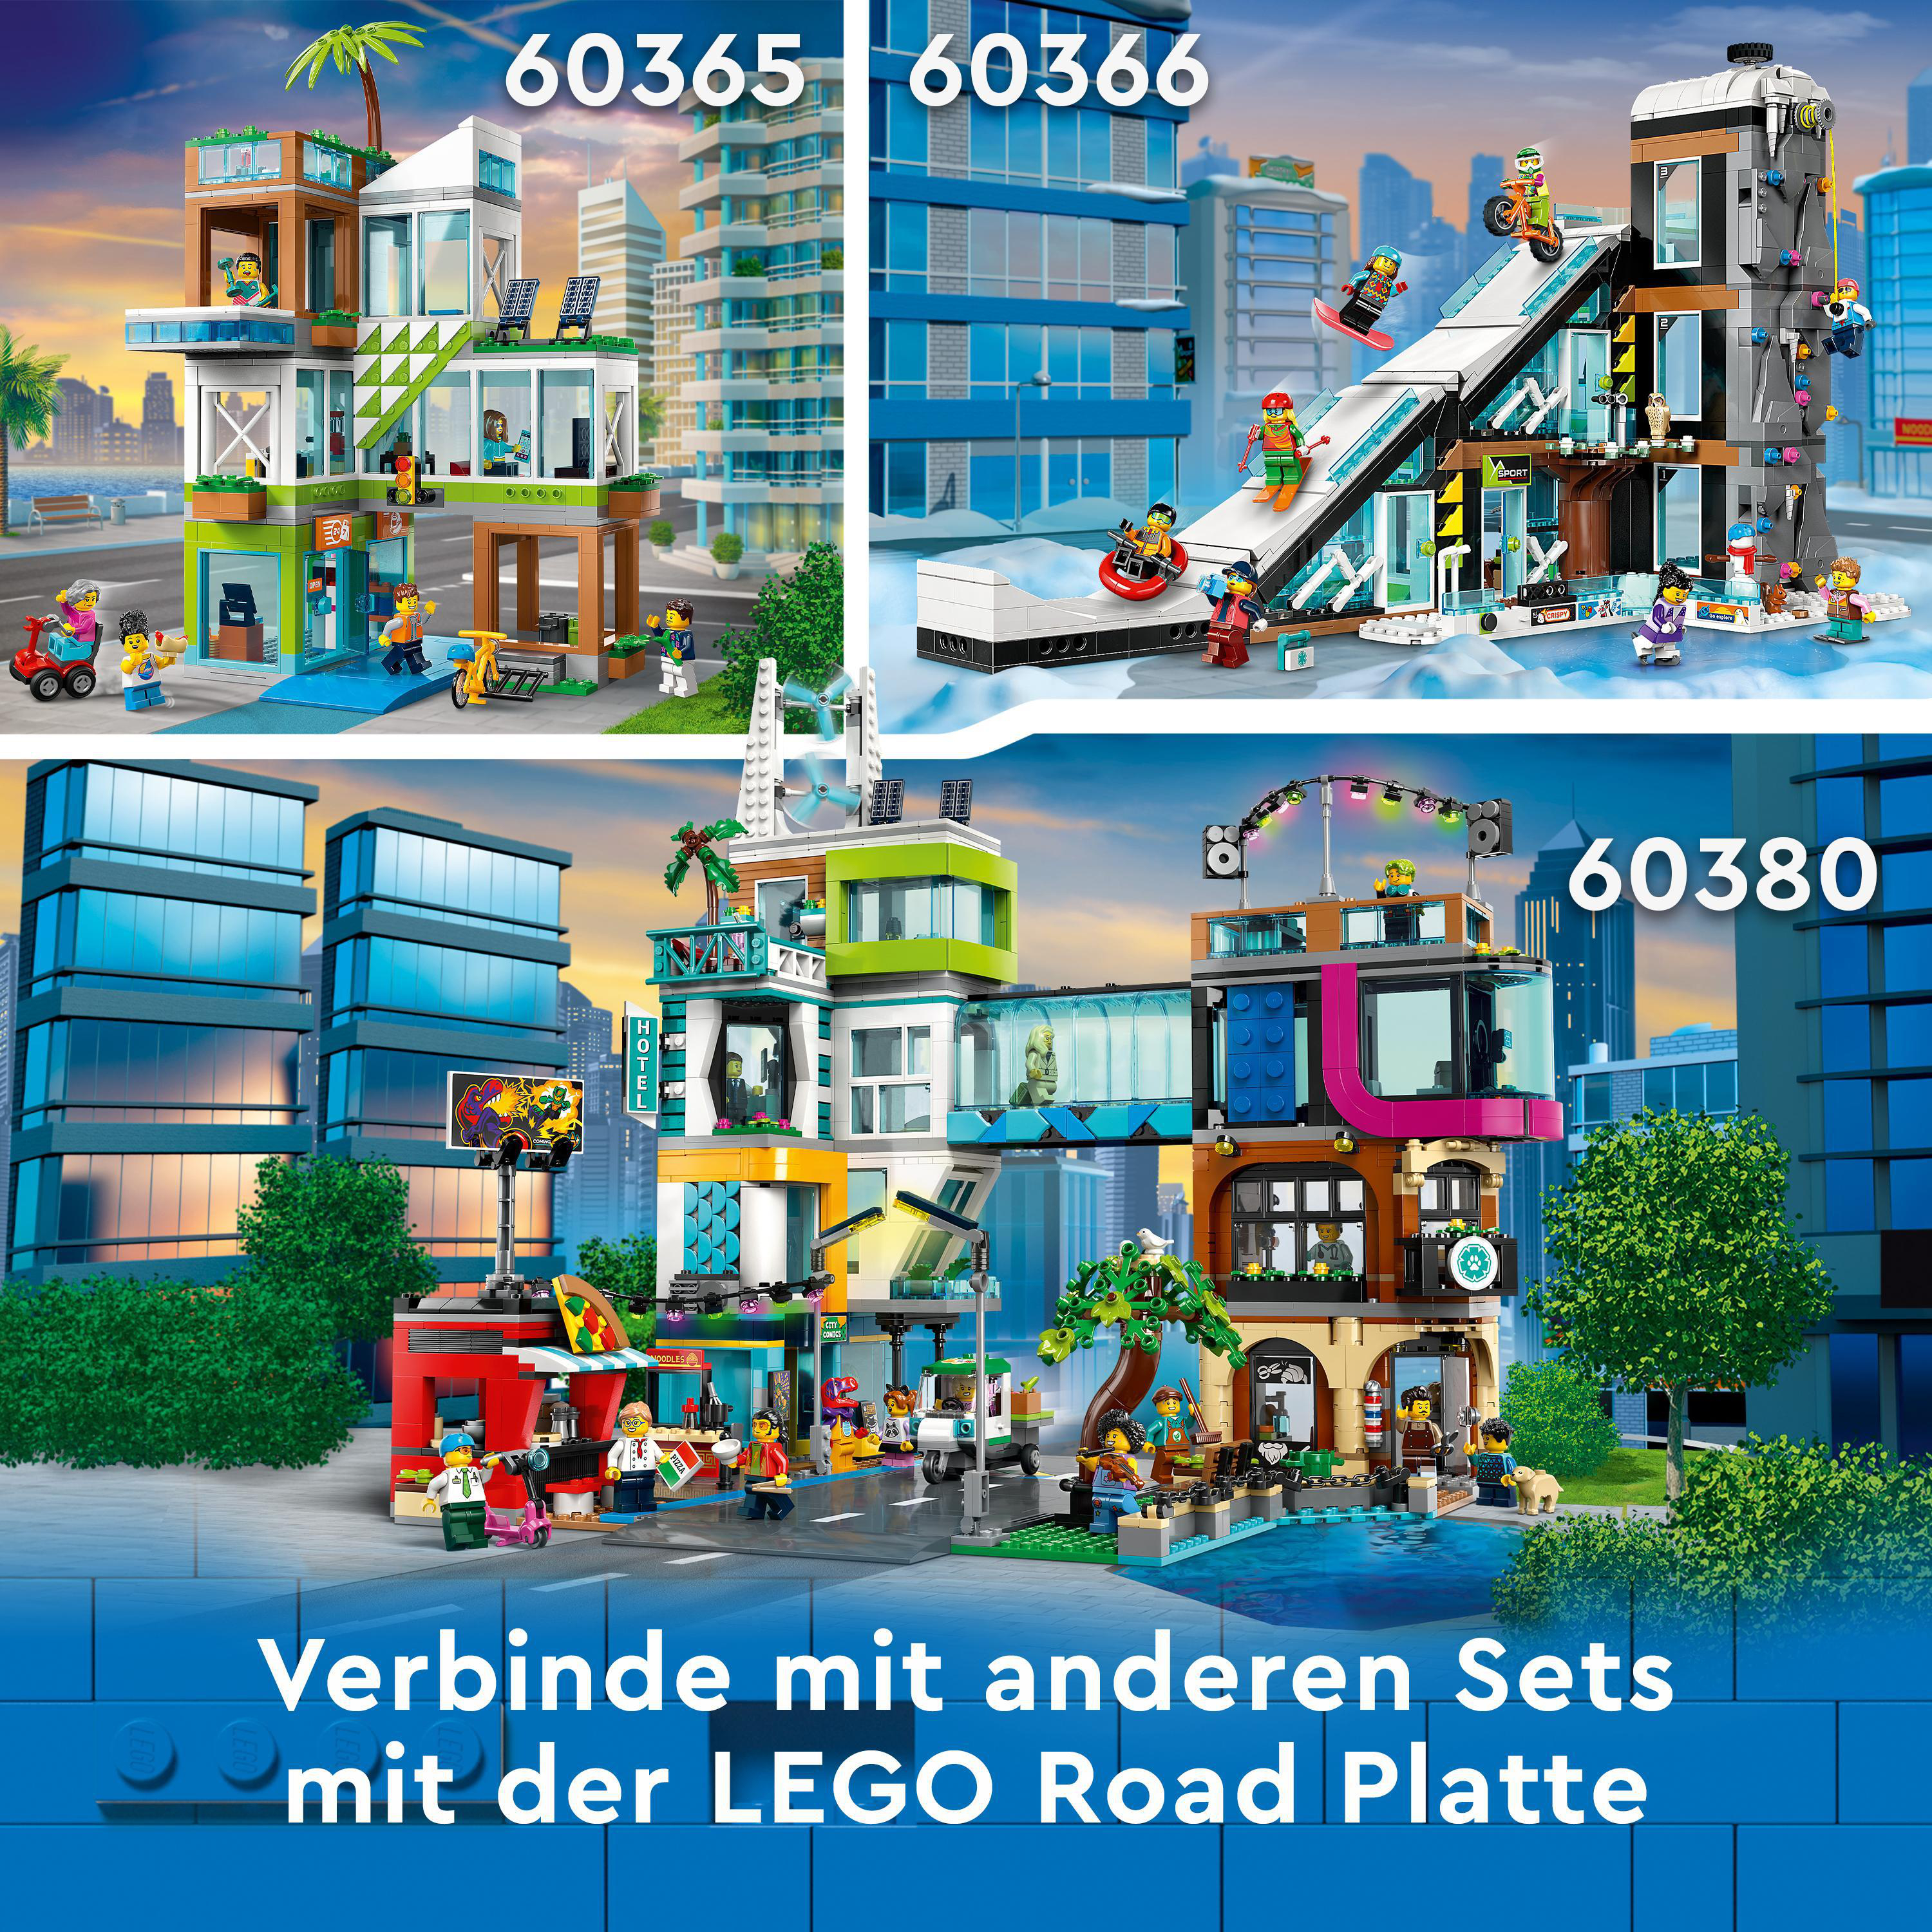 City Bausatz, Skaterpark 60364 Mehrfarbig LEGO